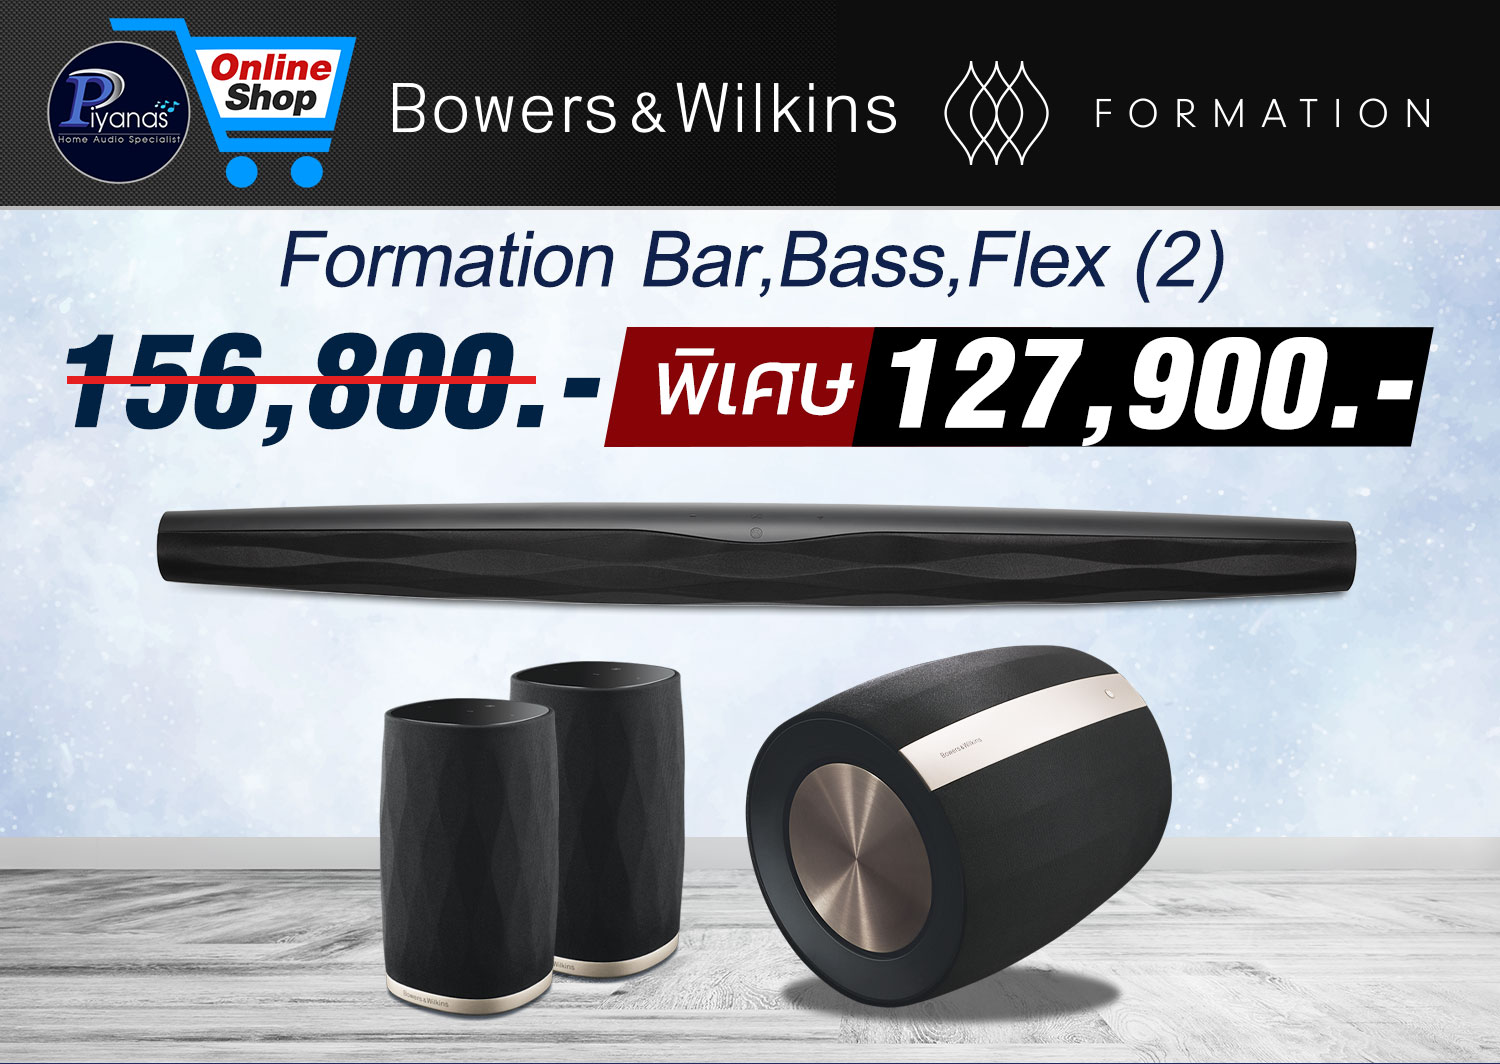 Formation Bar + formation Bass + 
Formation Flex 2 (ชิ้น)